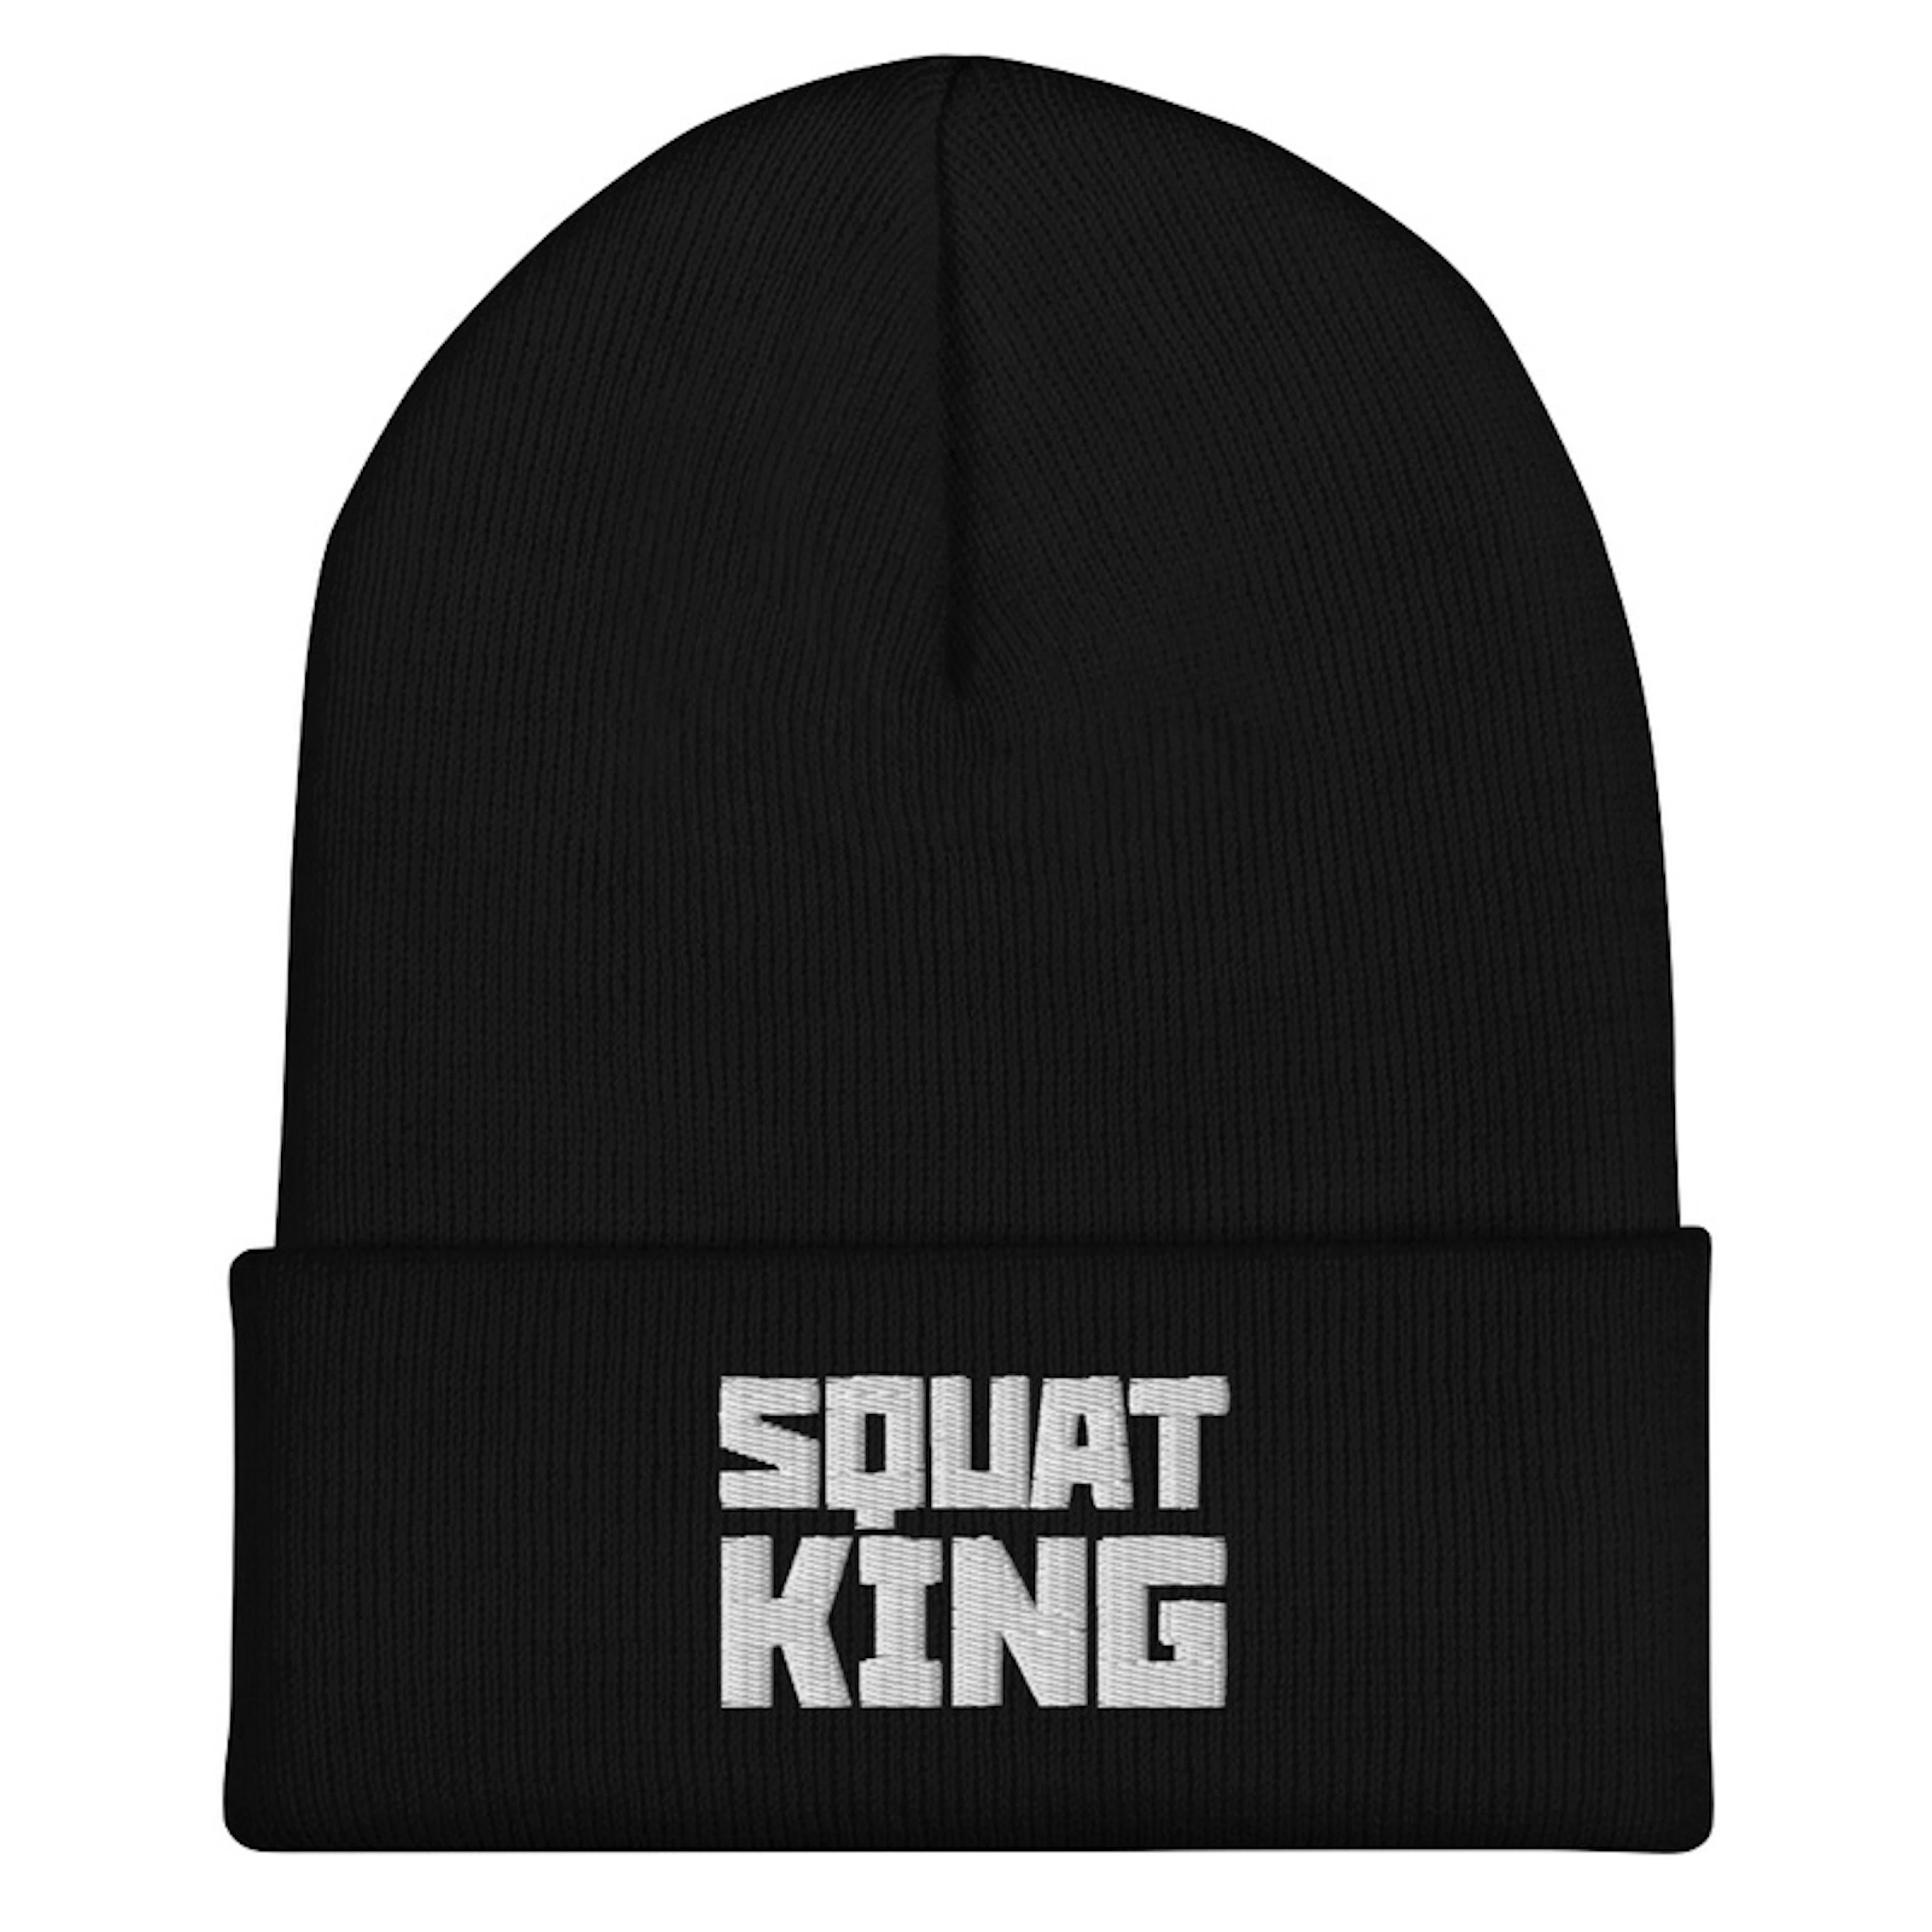 Squat King black hat